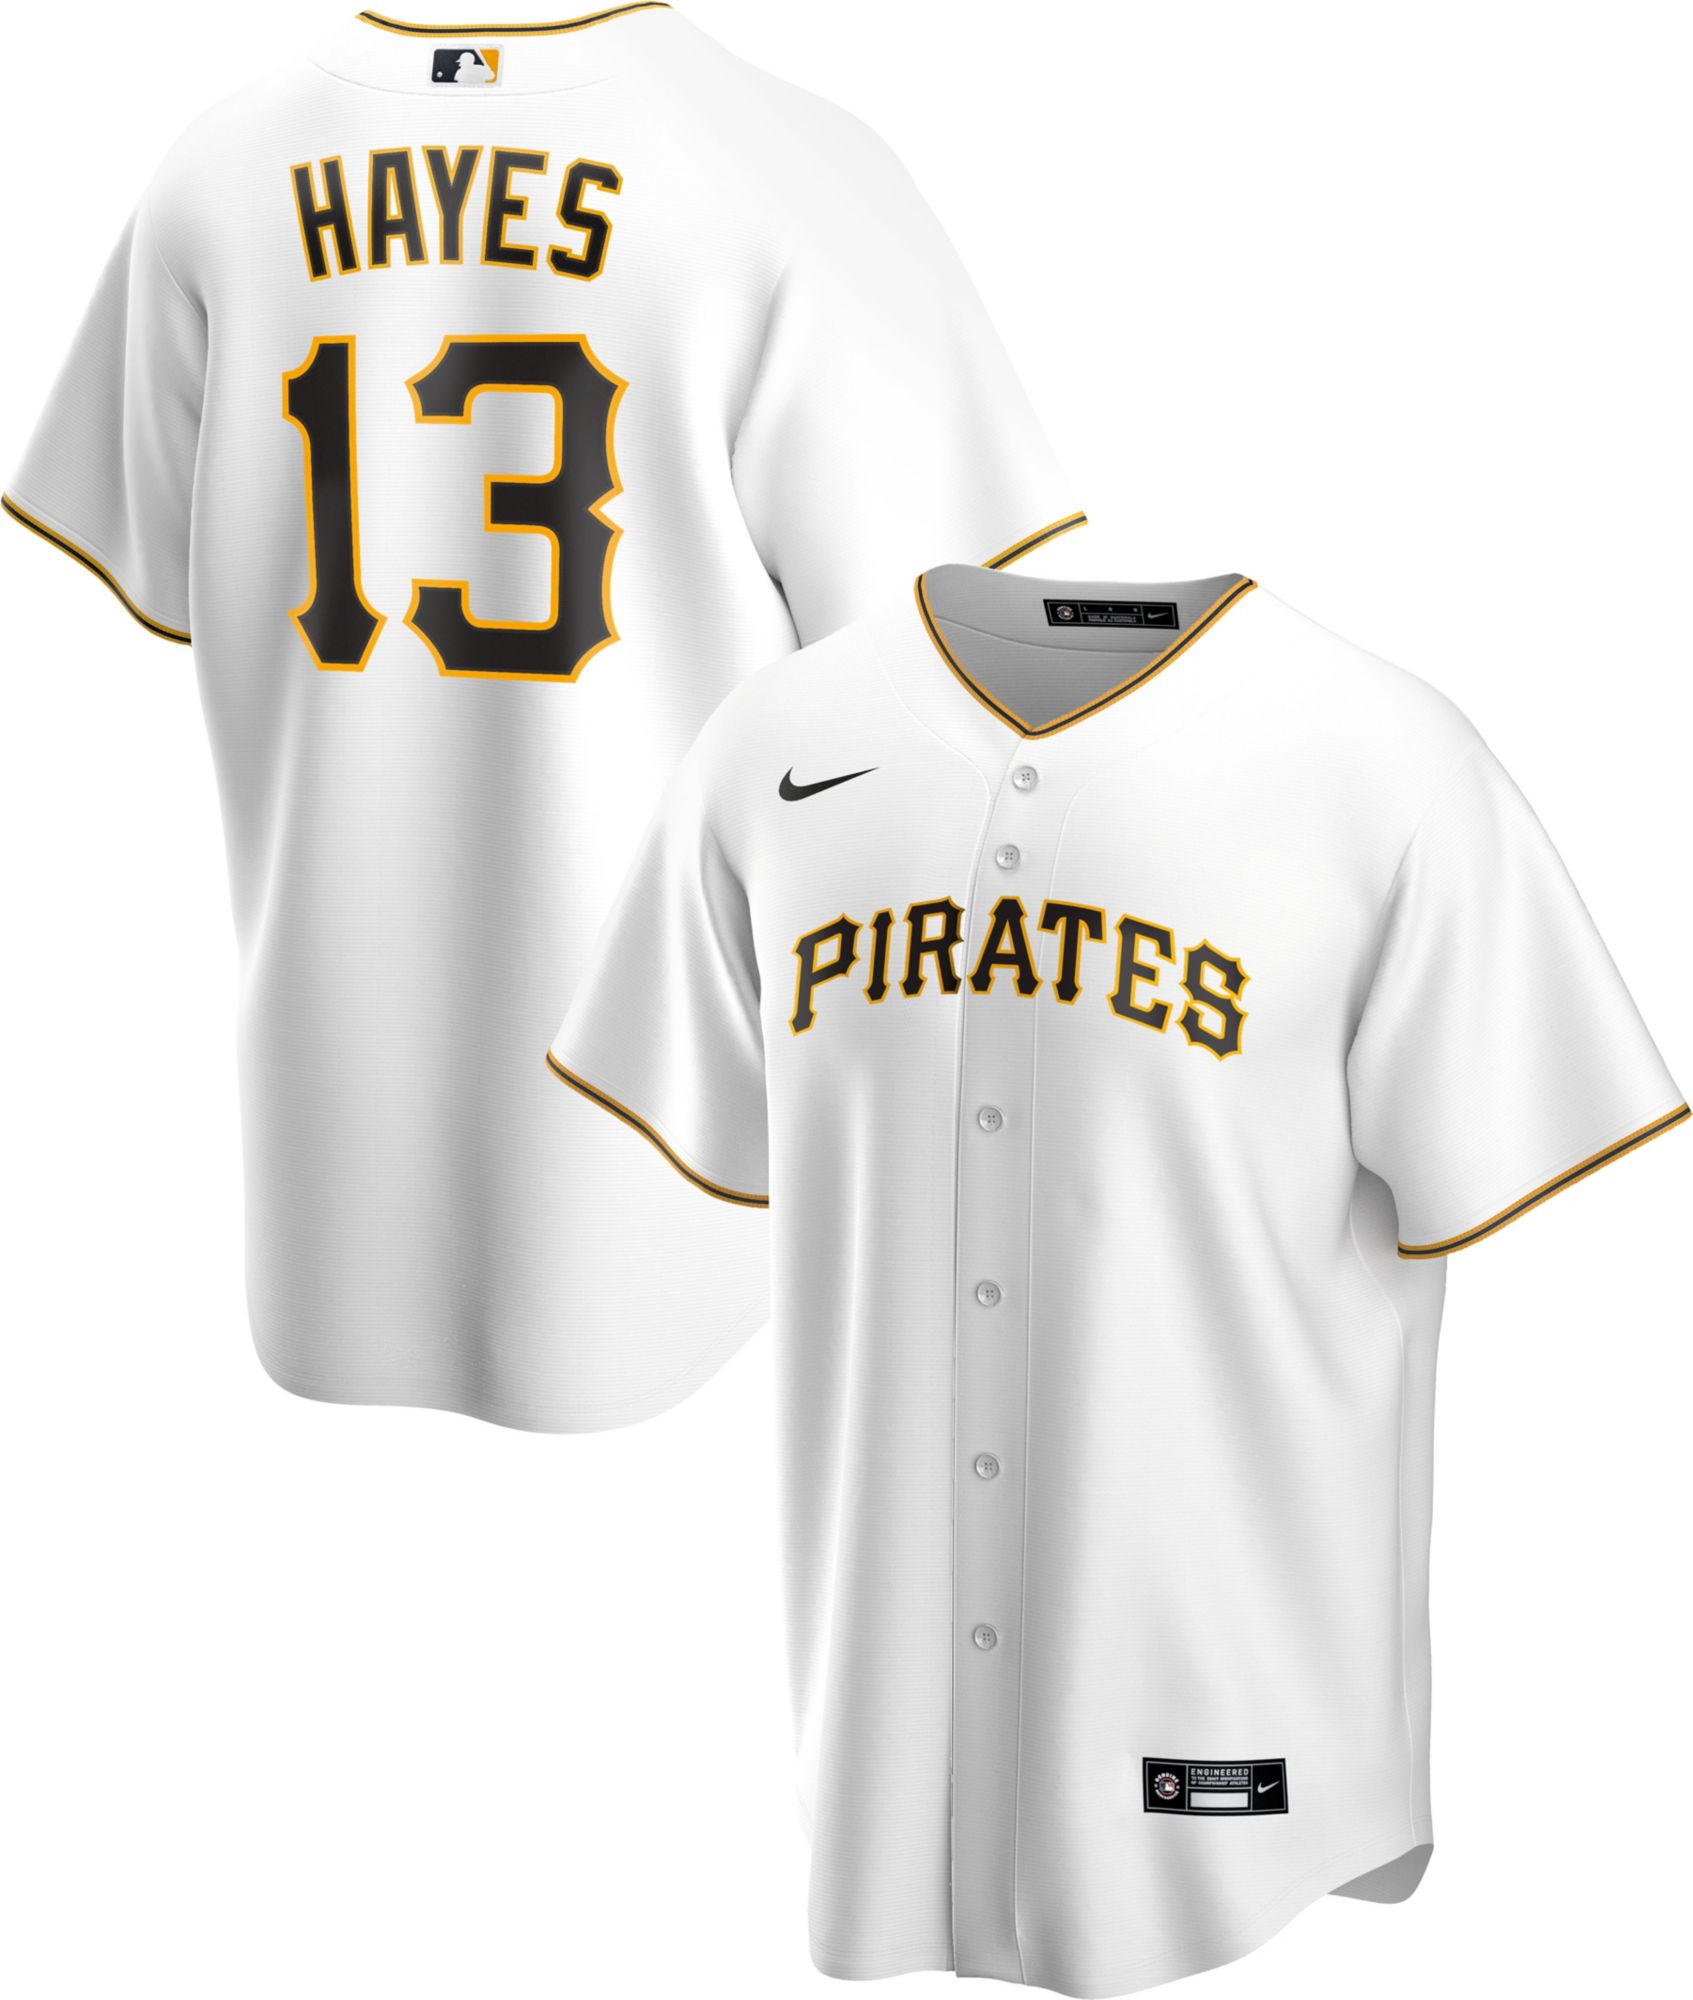 Lids Bryan Reynolds Pittsburgh Pirates Jersey Design Desktop